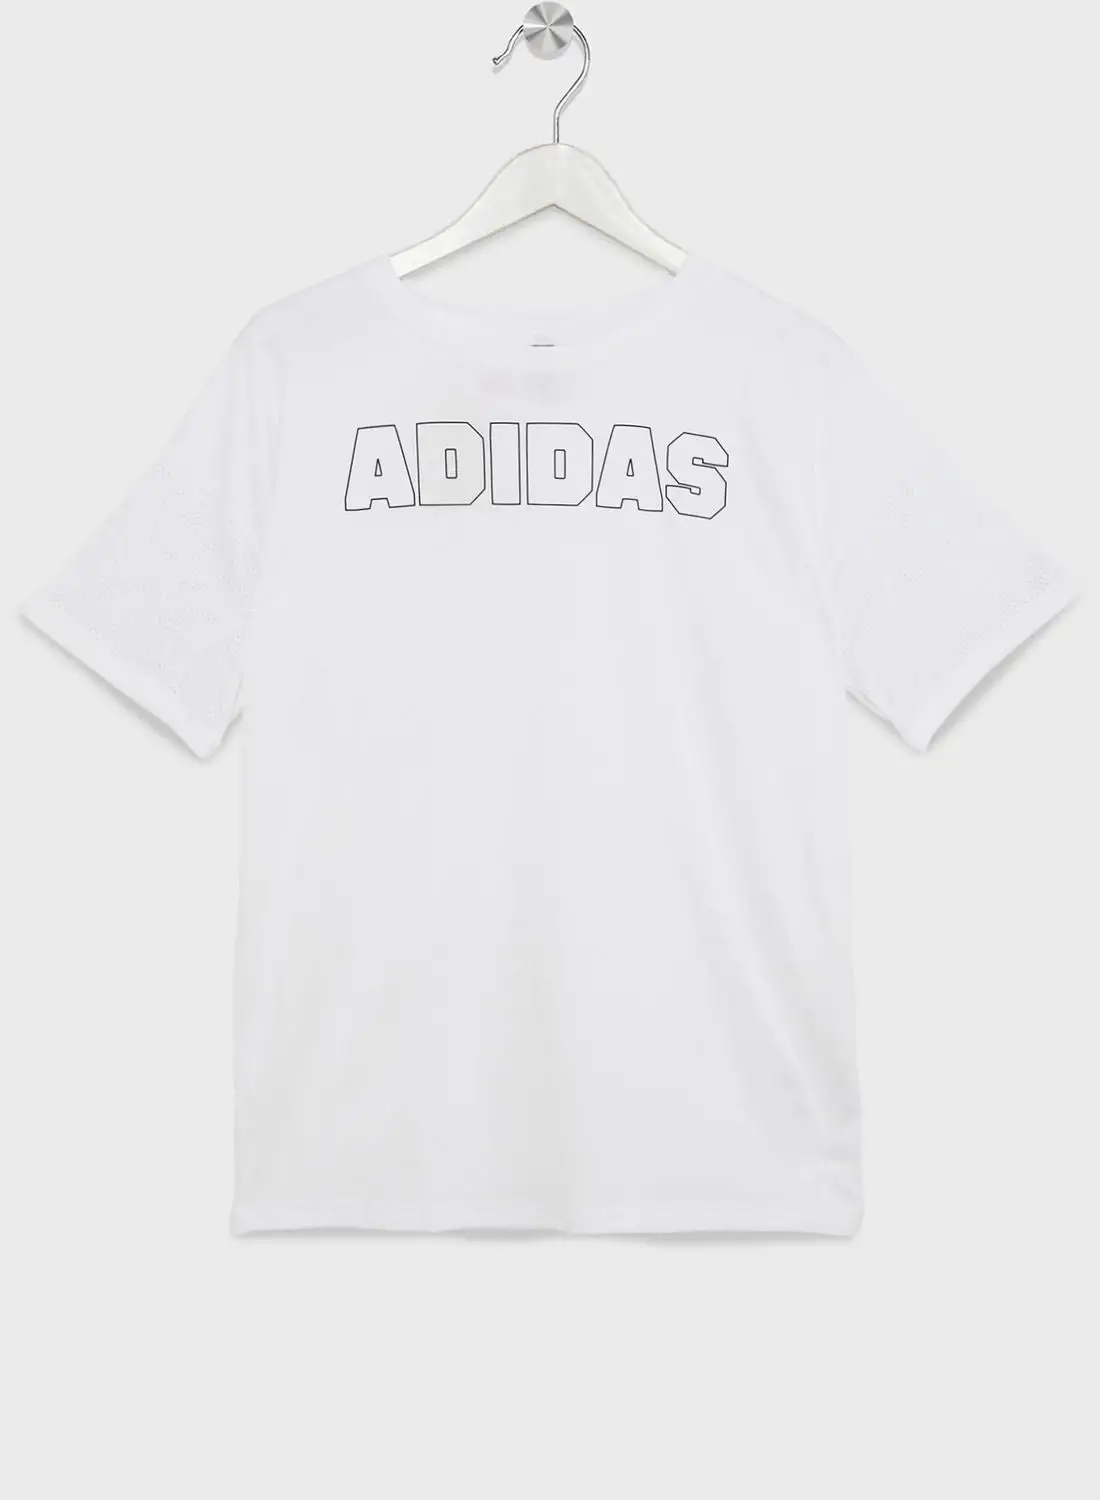 Adidas Junior Dance T-Shirt